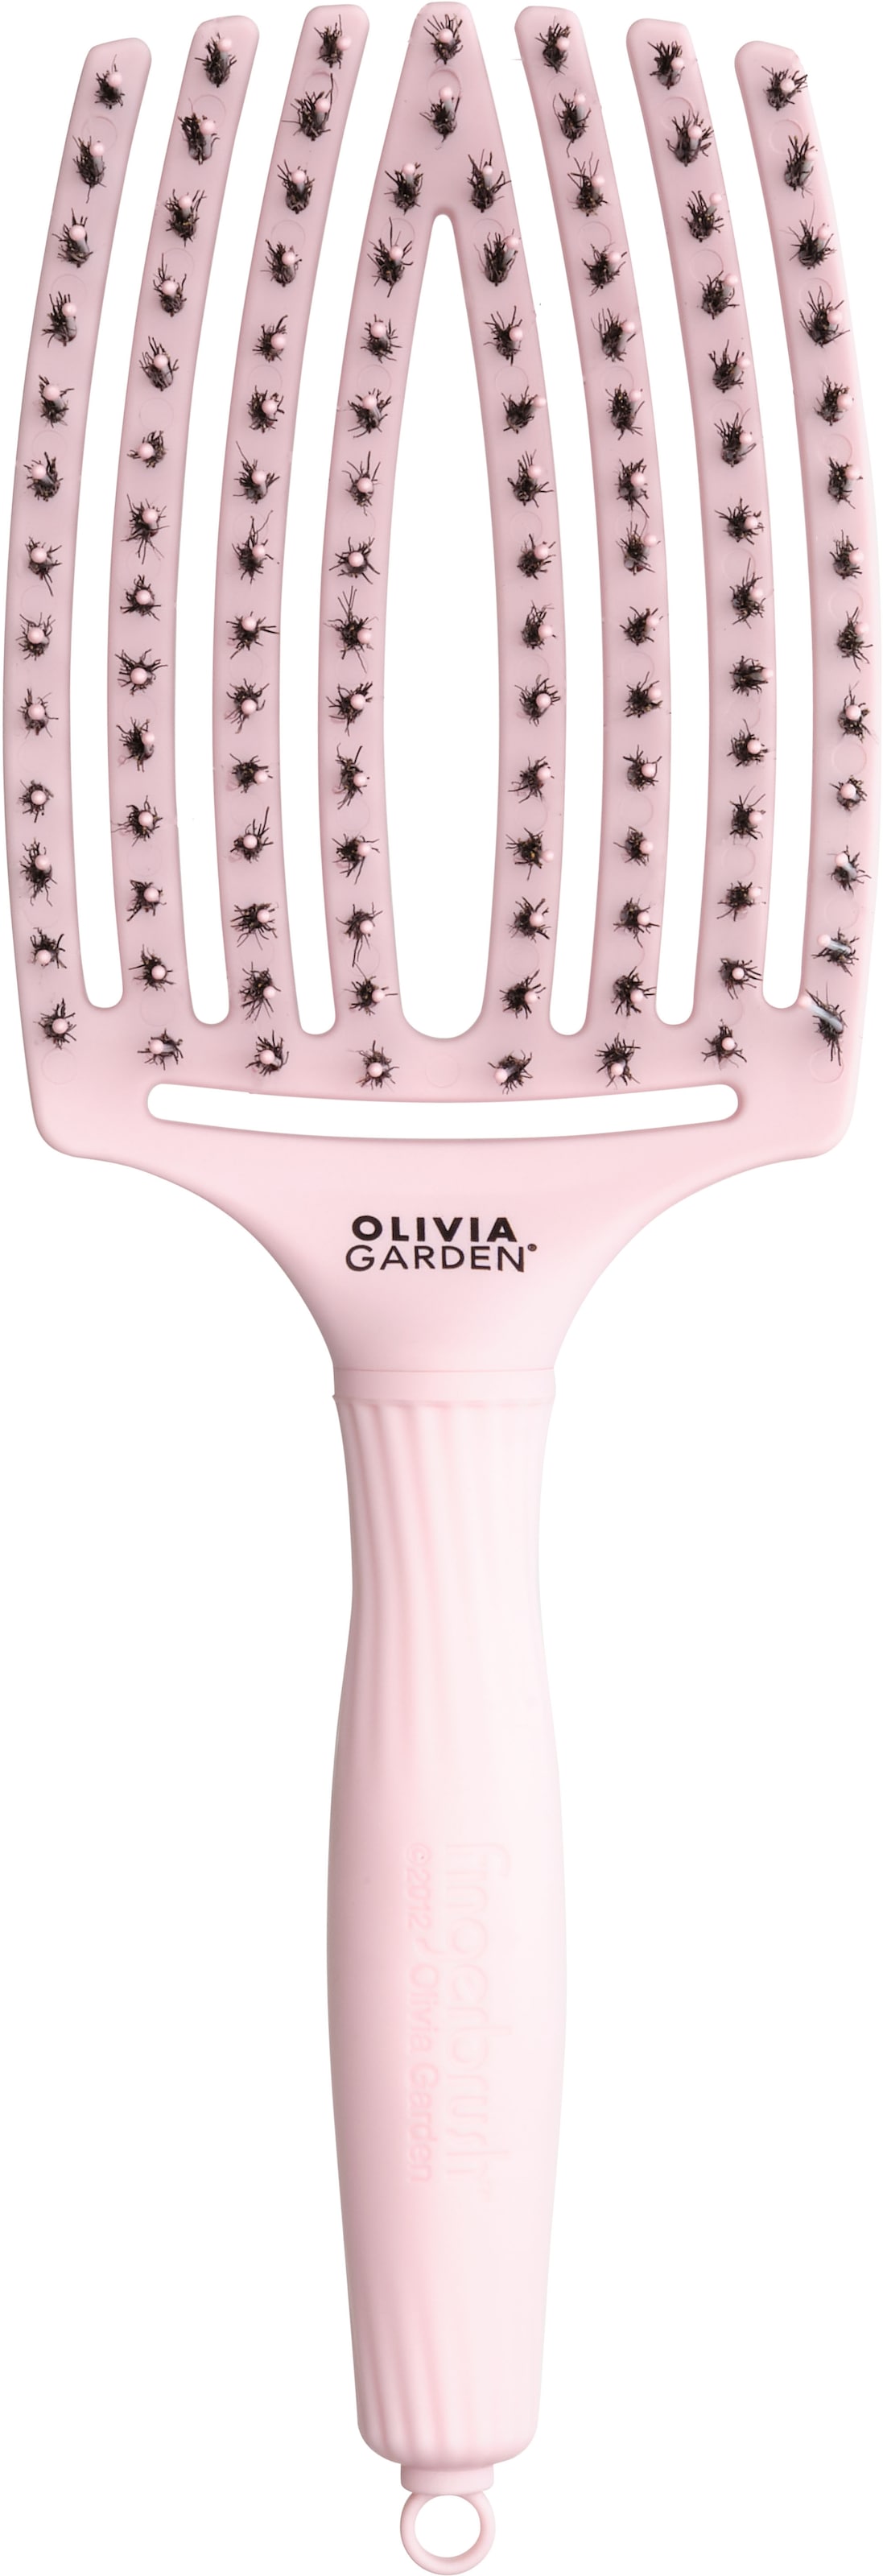 OLIVIA | large« GARDEN BAUR Combo Haarentwirrbürste »Fingerbrush Pink